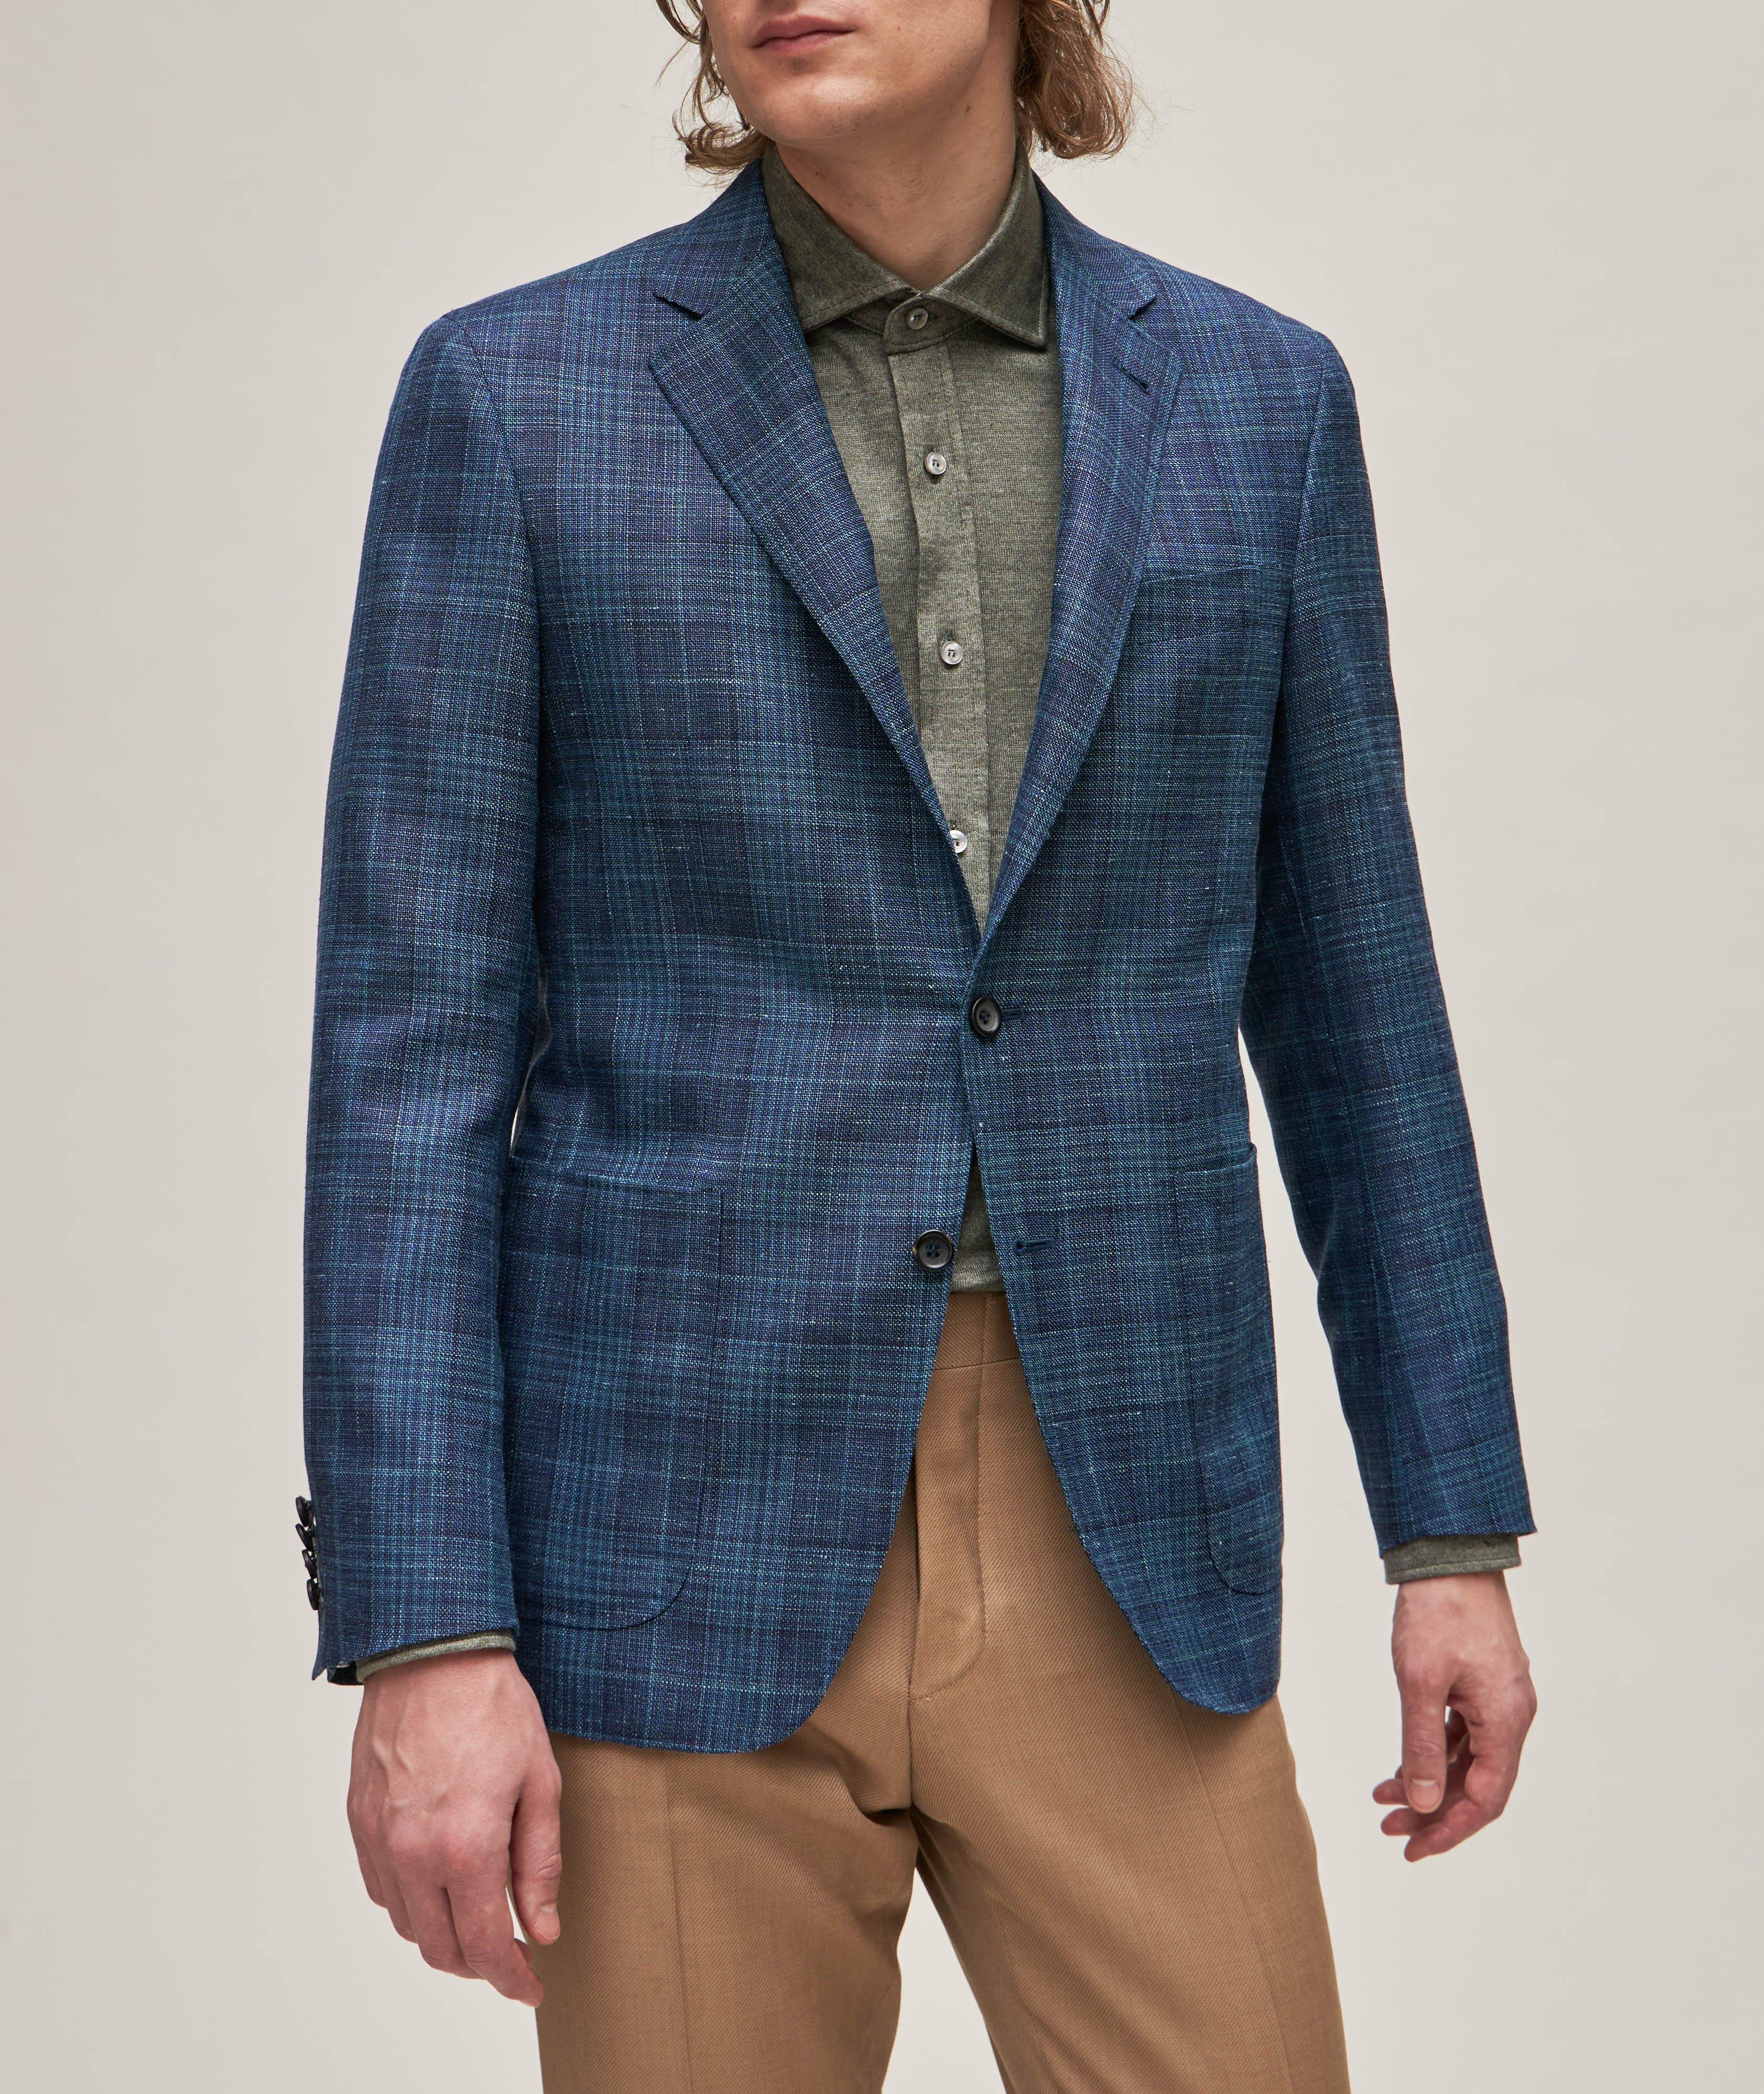 Kei Plaid Wool, Silk & Linen Sport Jacket image 1